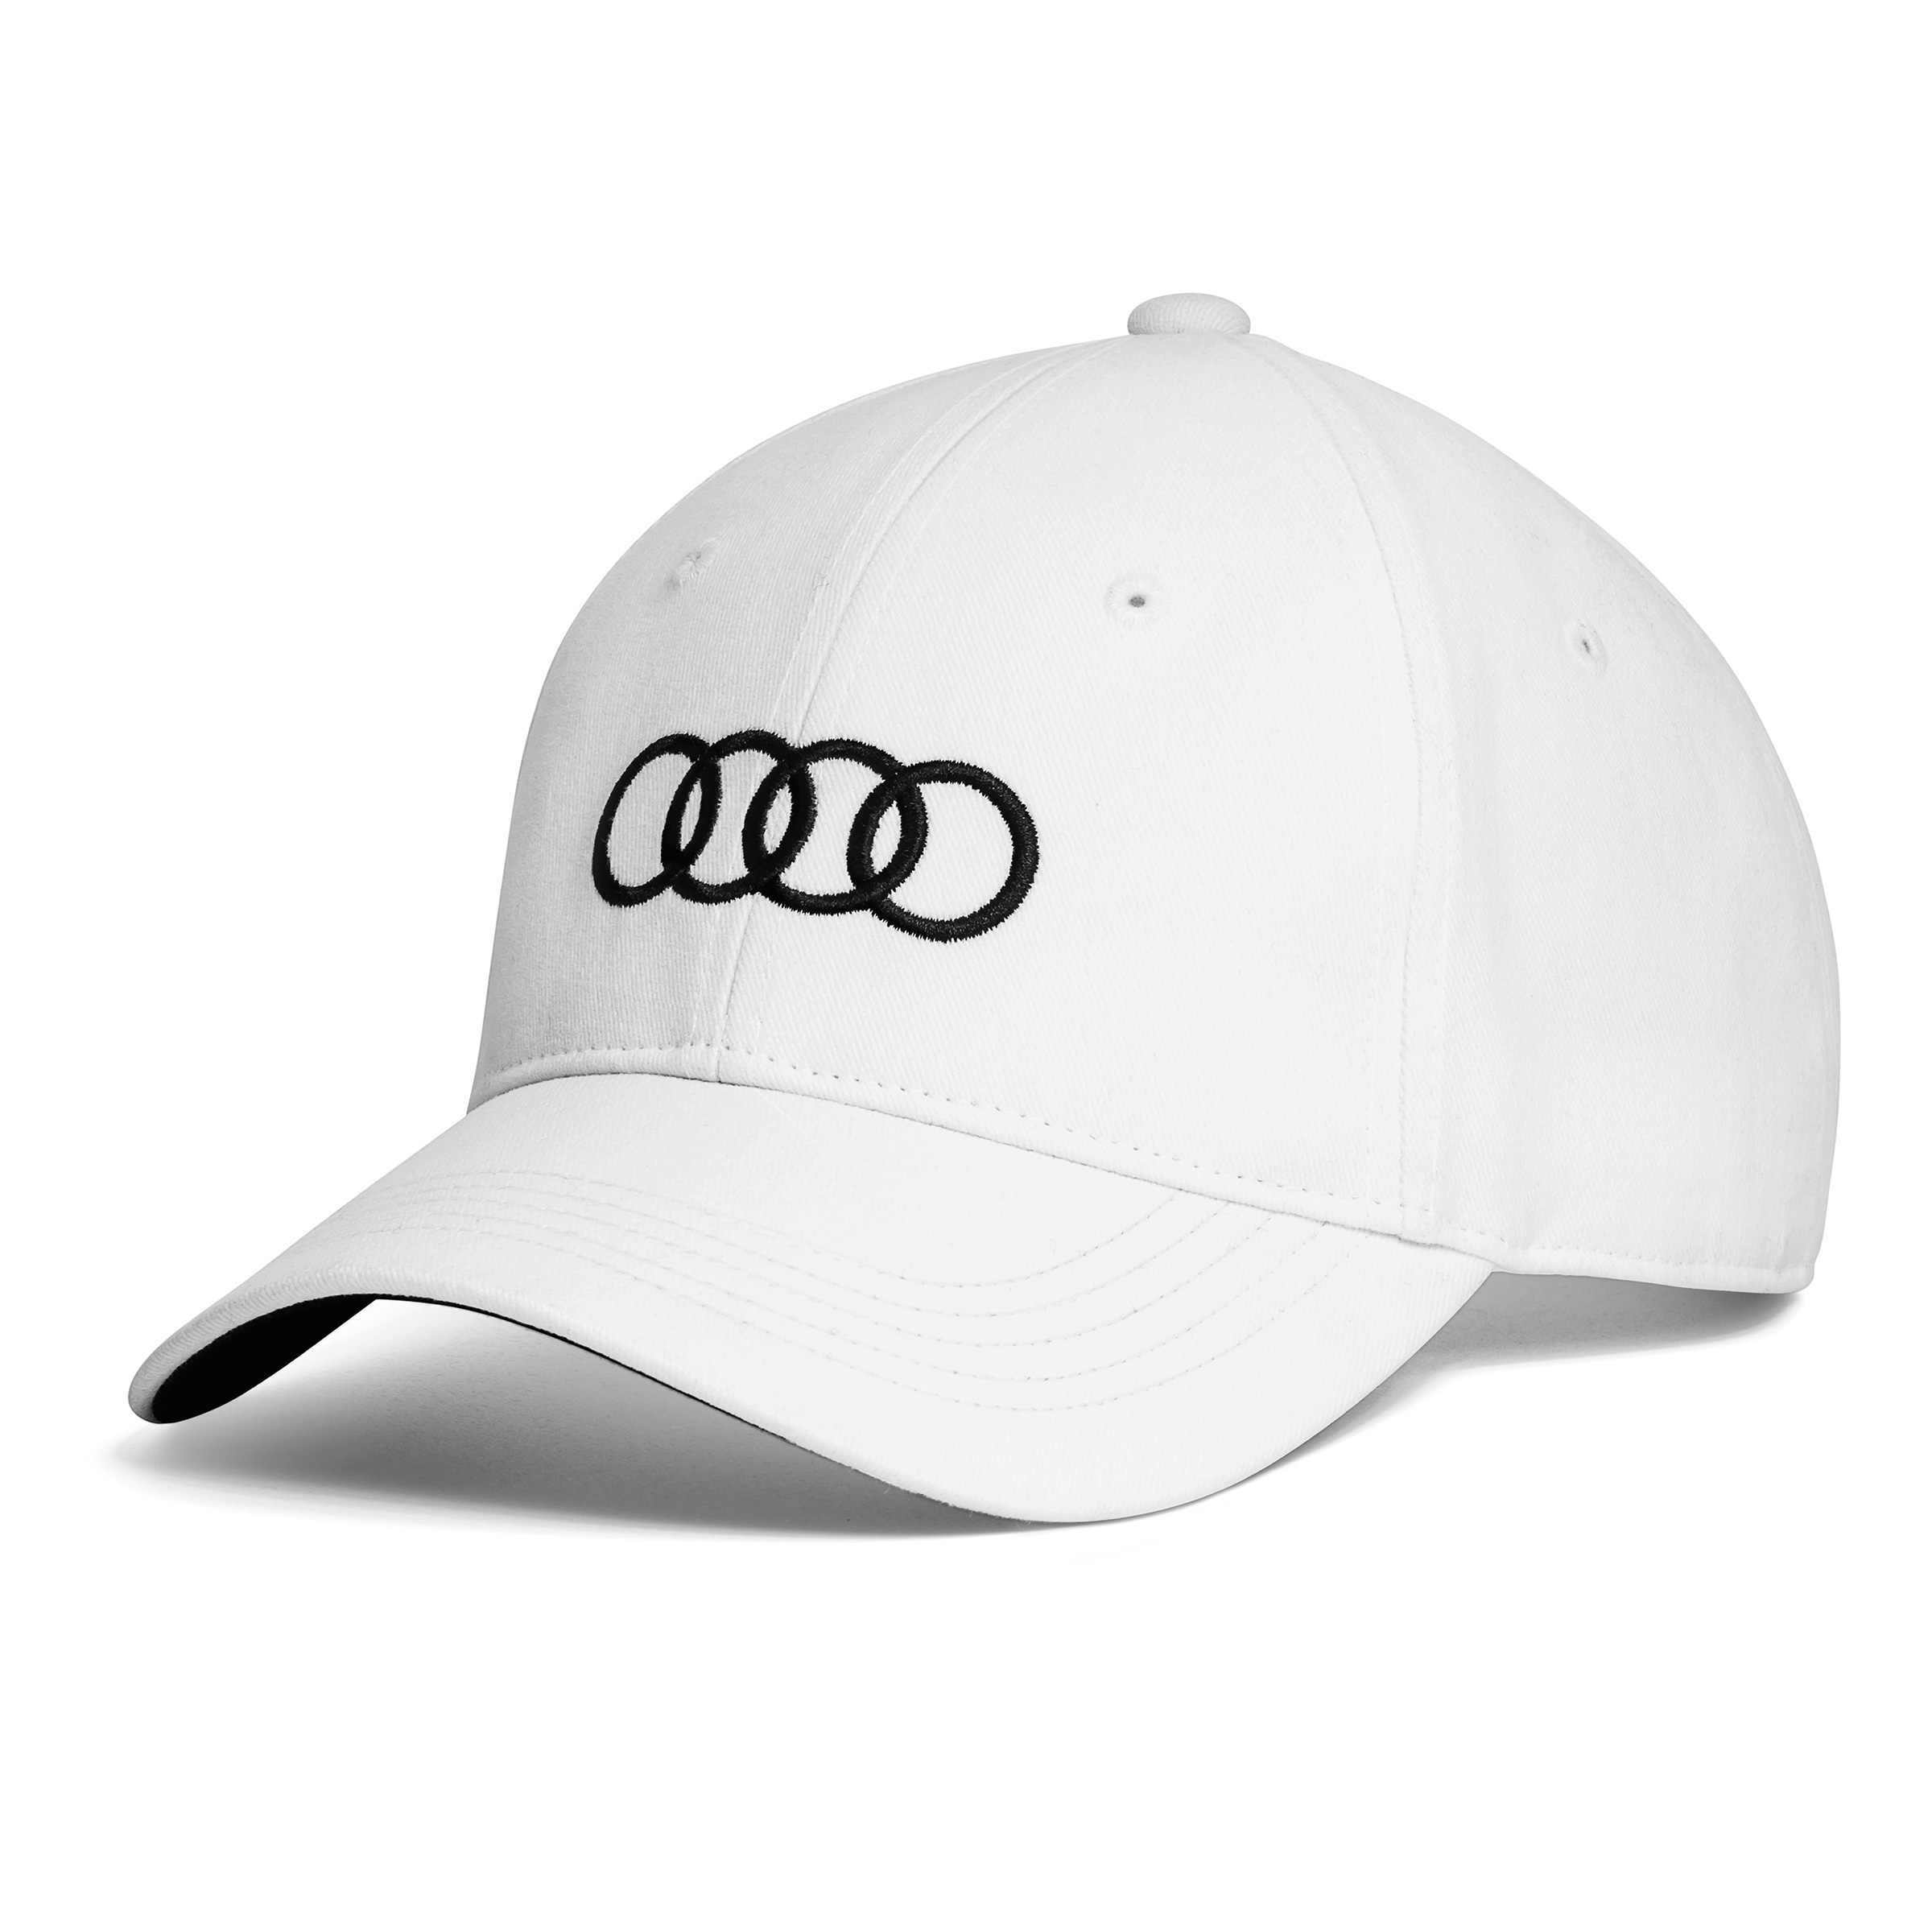 Original Audi Cap Baseballkappe Baseballcap Basecap Mütze weiß